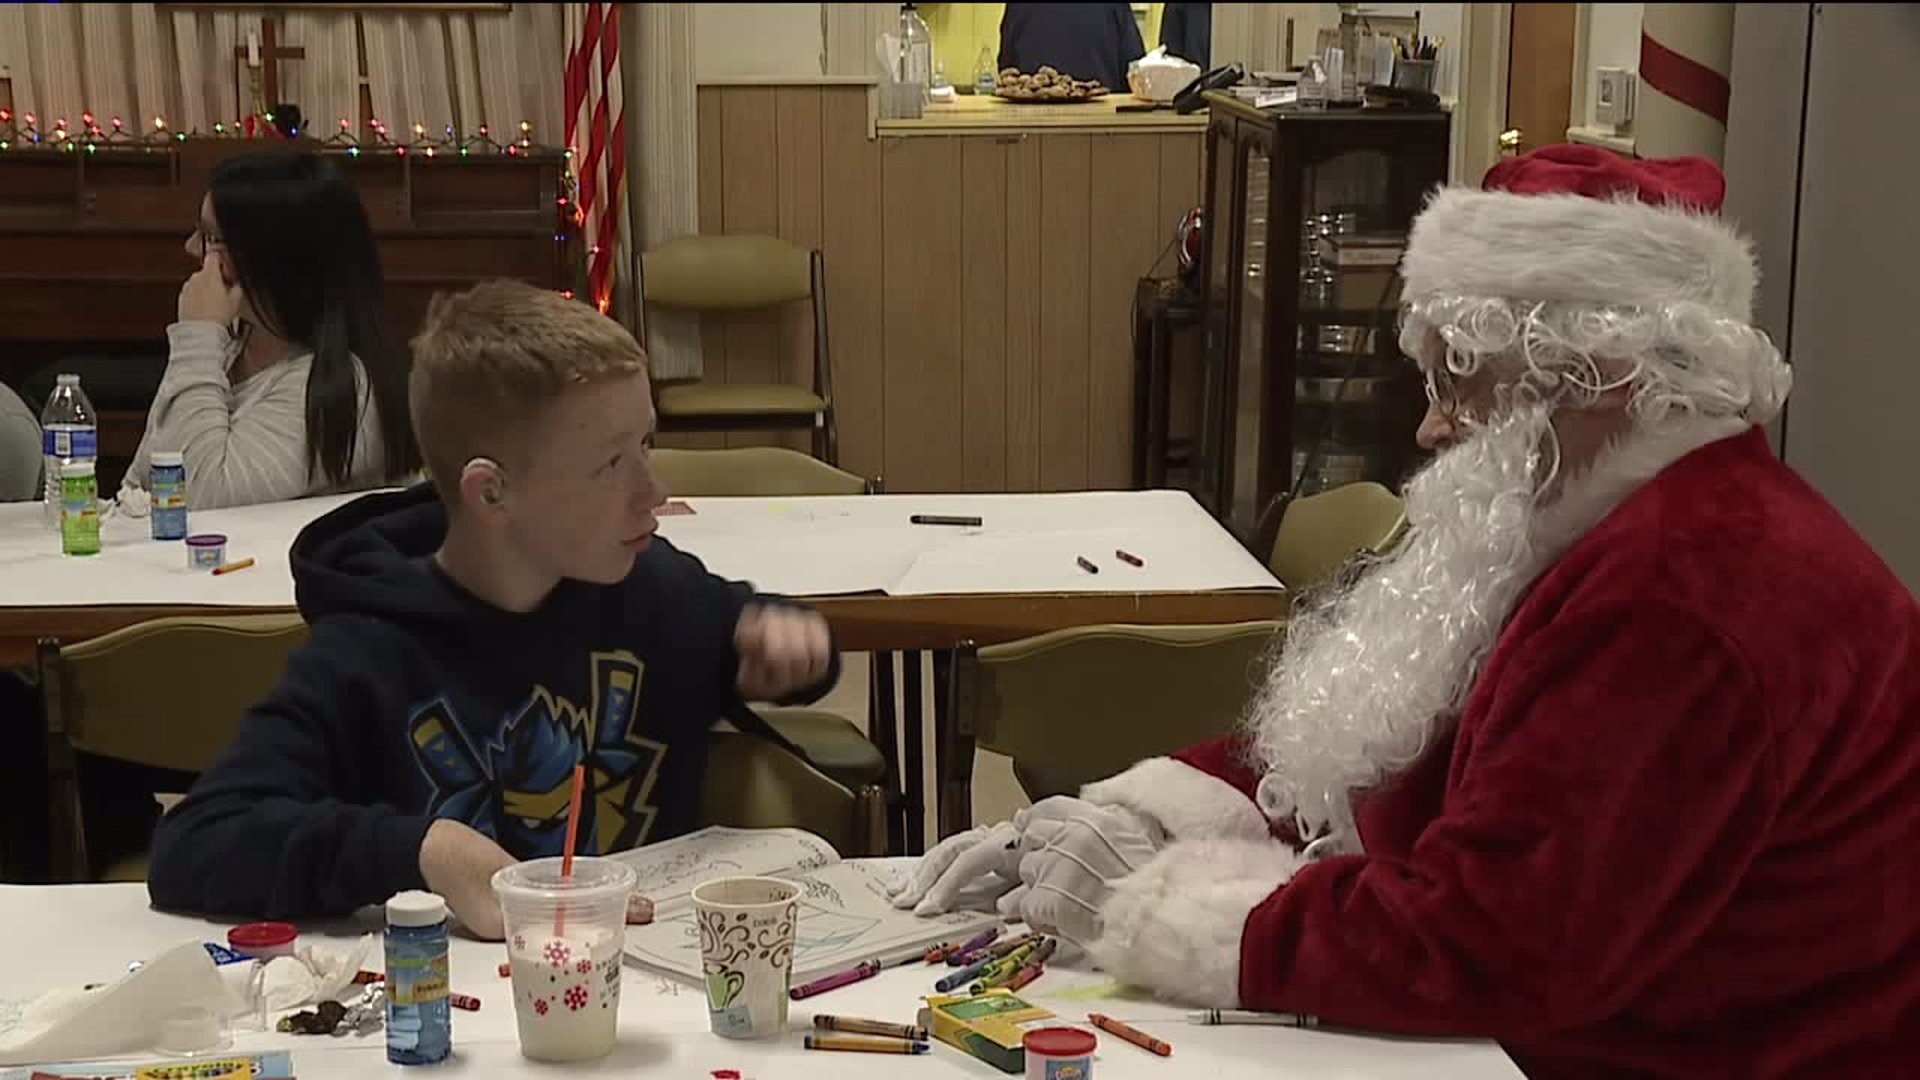 "Sensitive Santa" Offers Christmas for Everyone